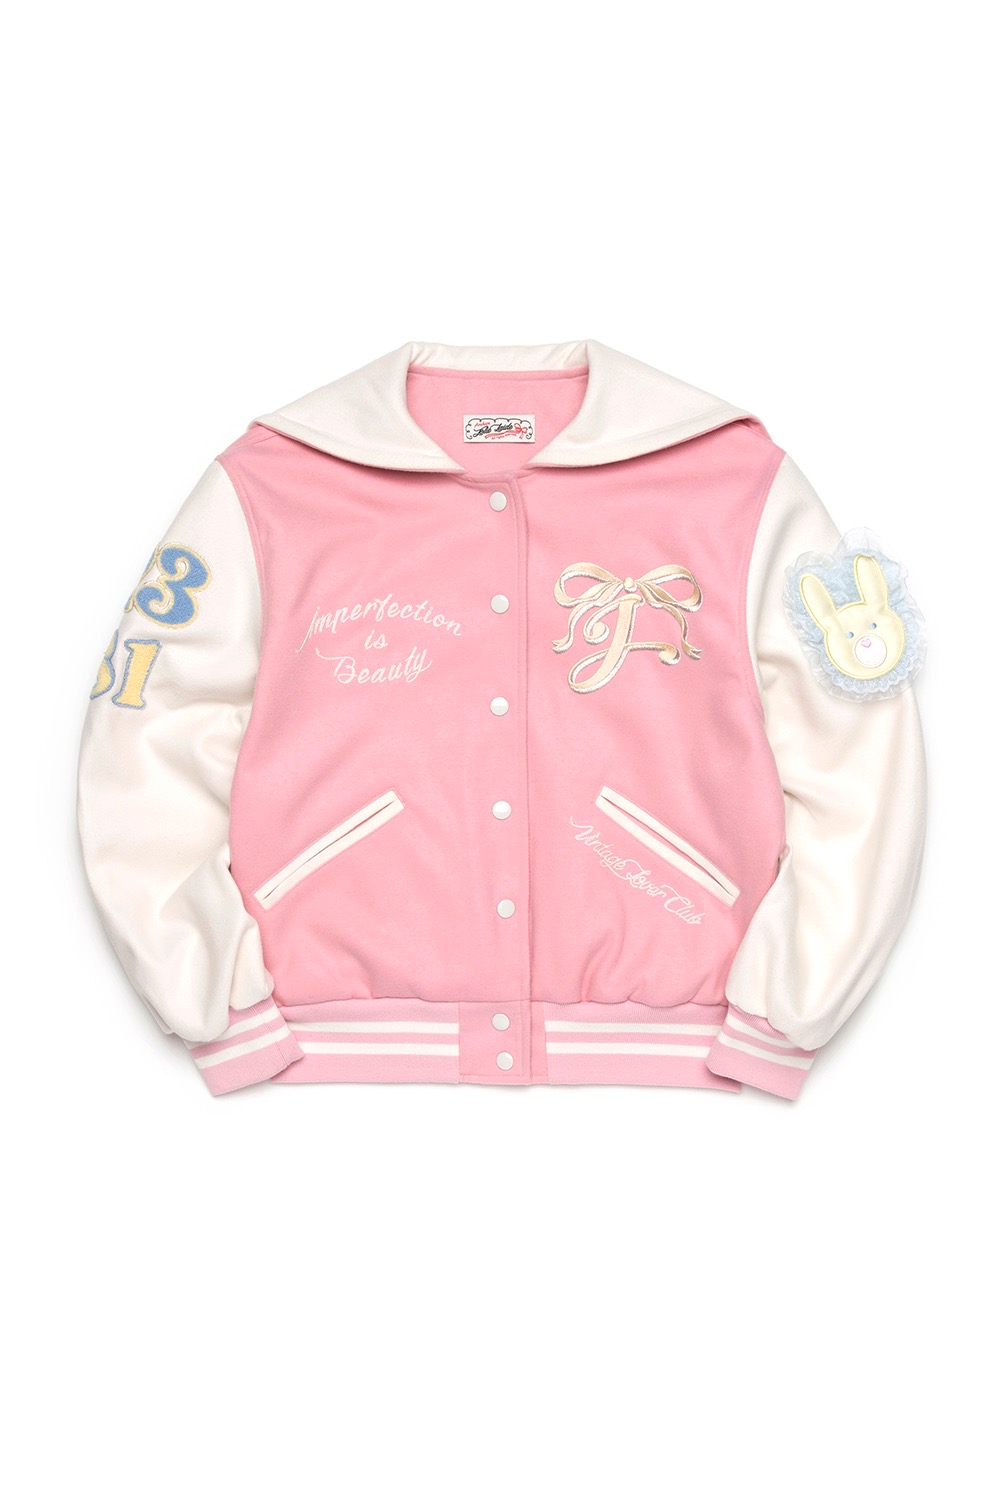 Enya Varcity jacket (pink)